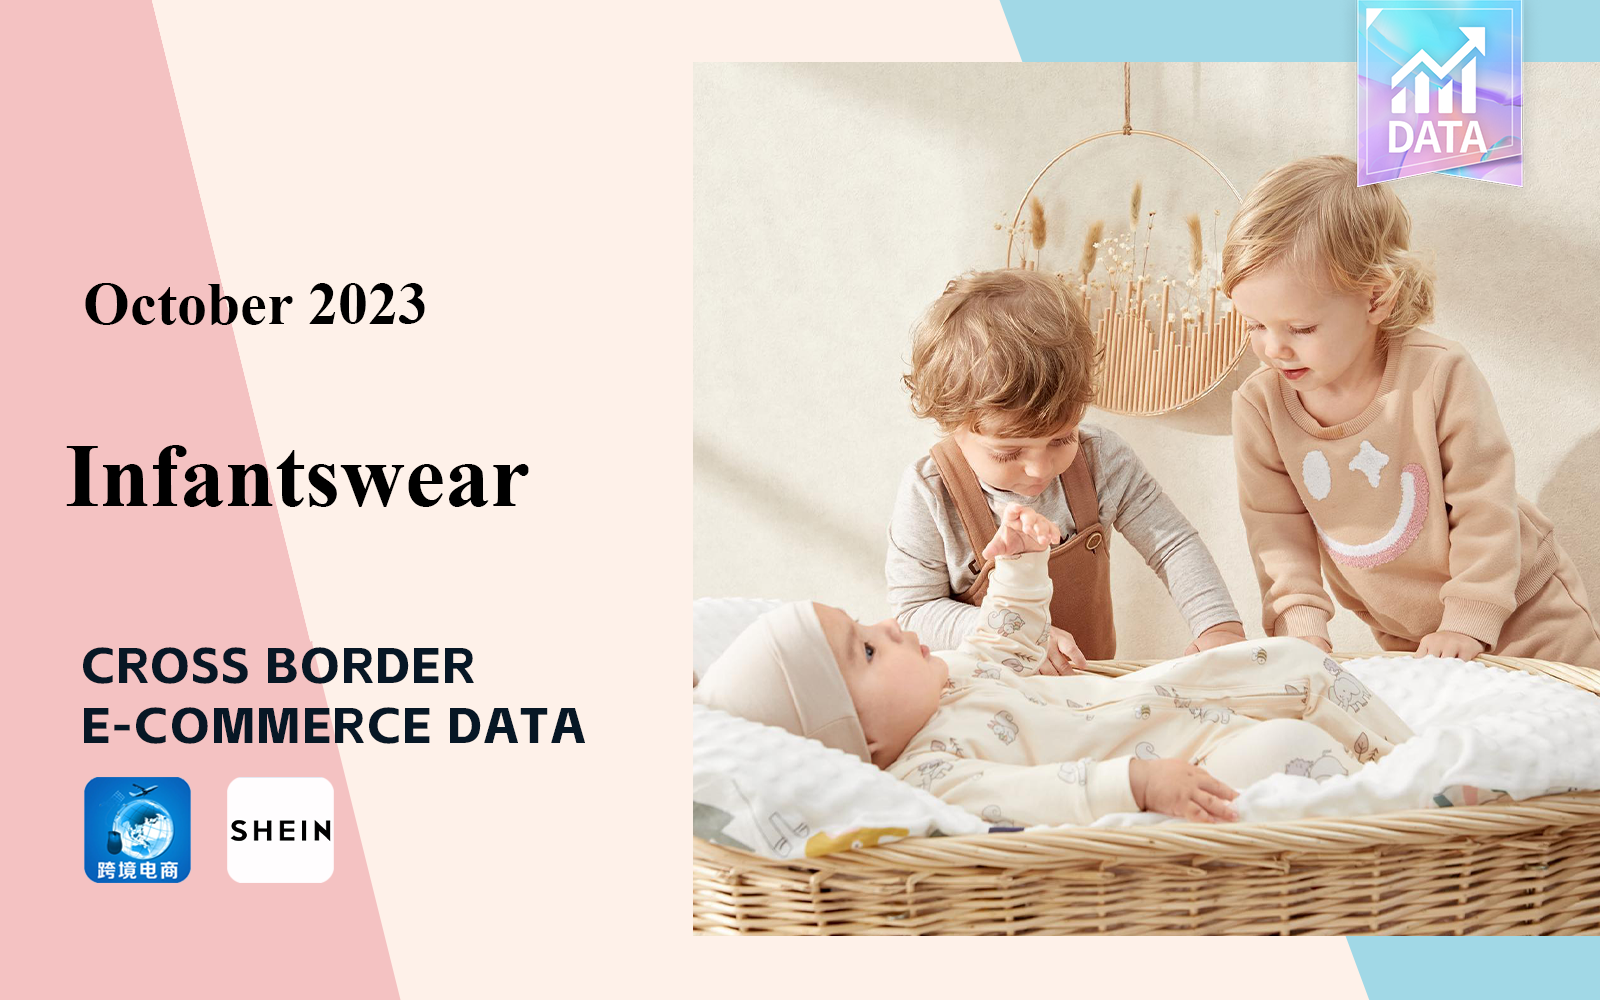 SHEIN -- The Data Analysis of Kidswear Cross-border E-commerce